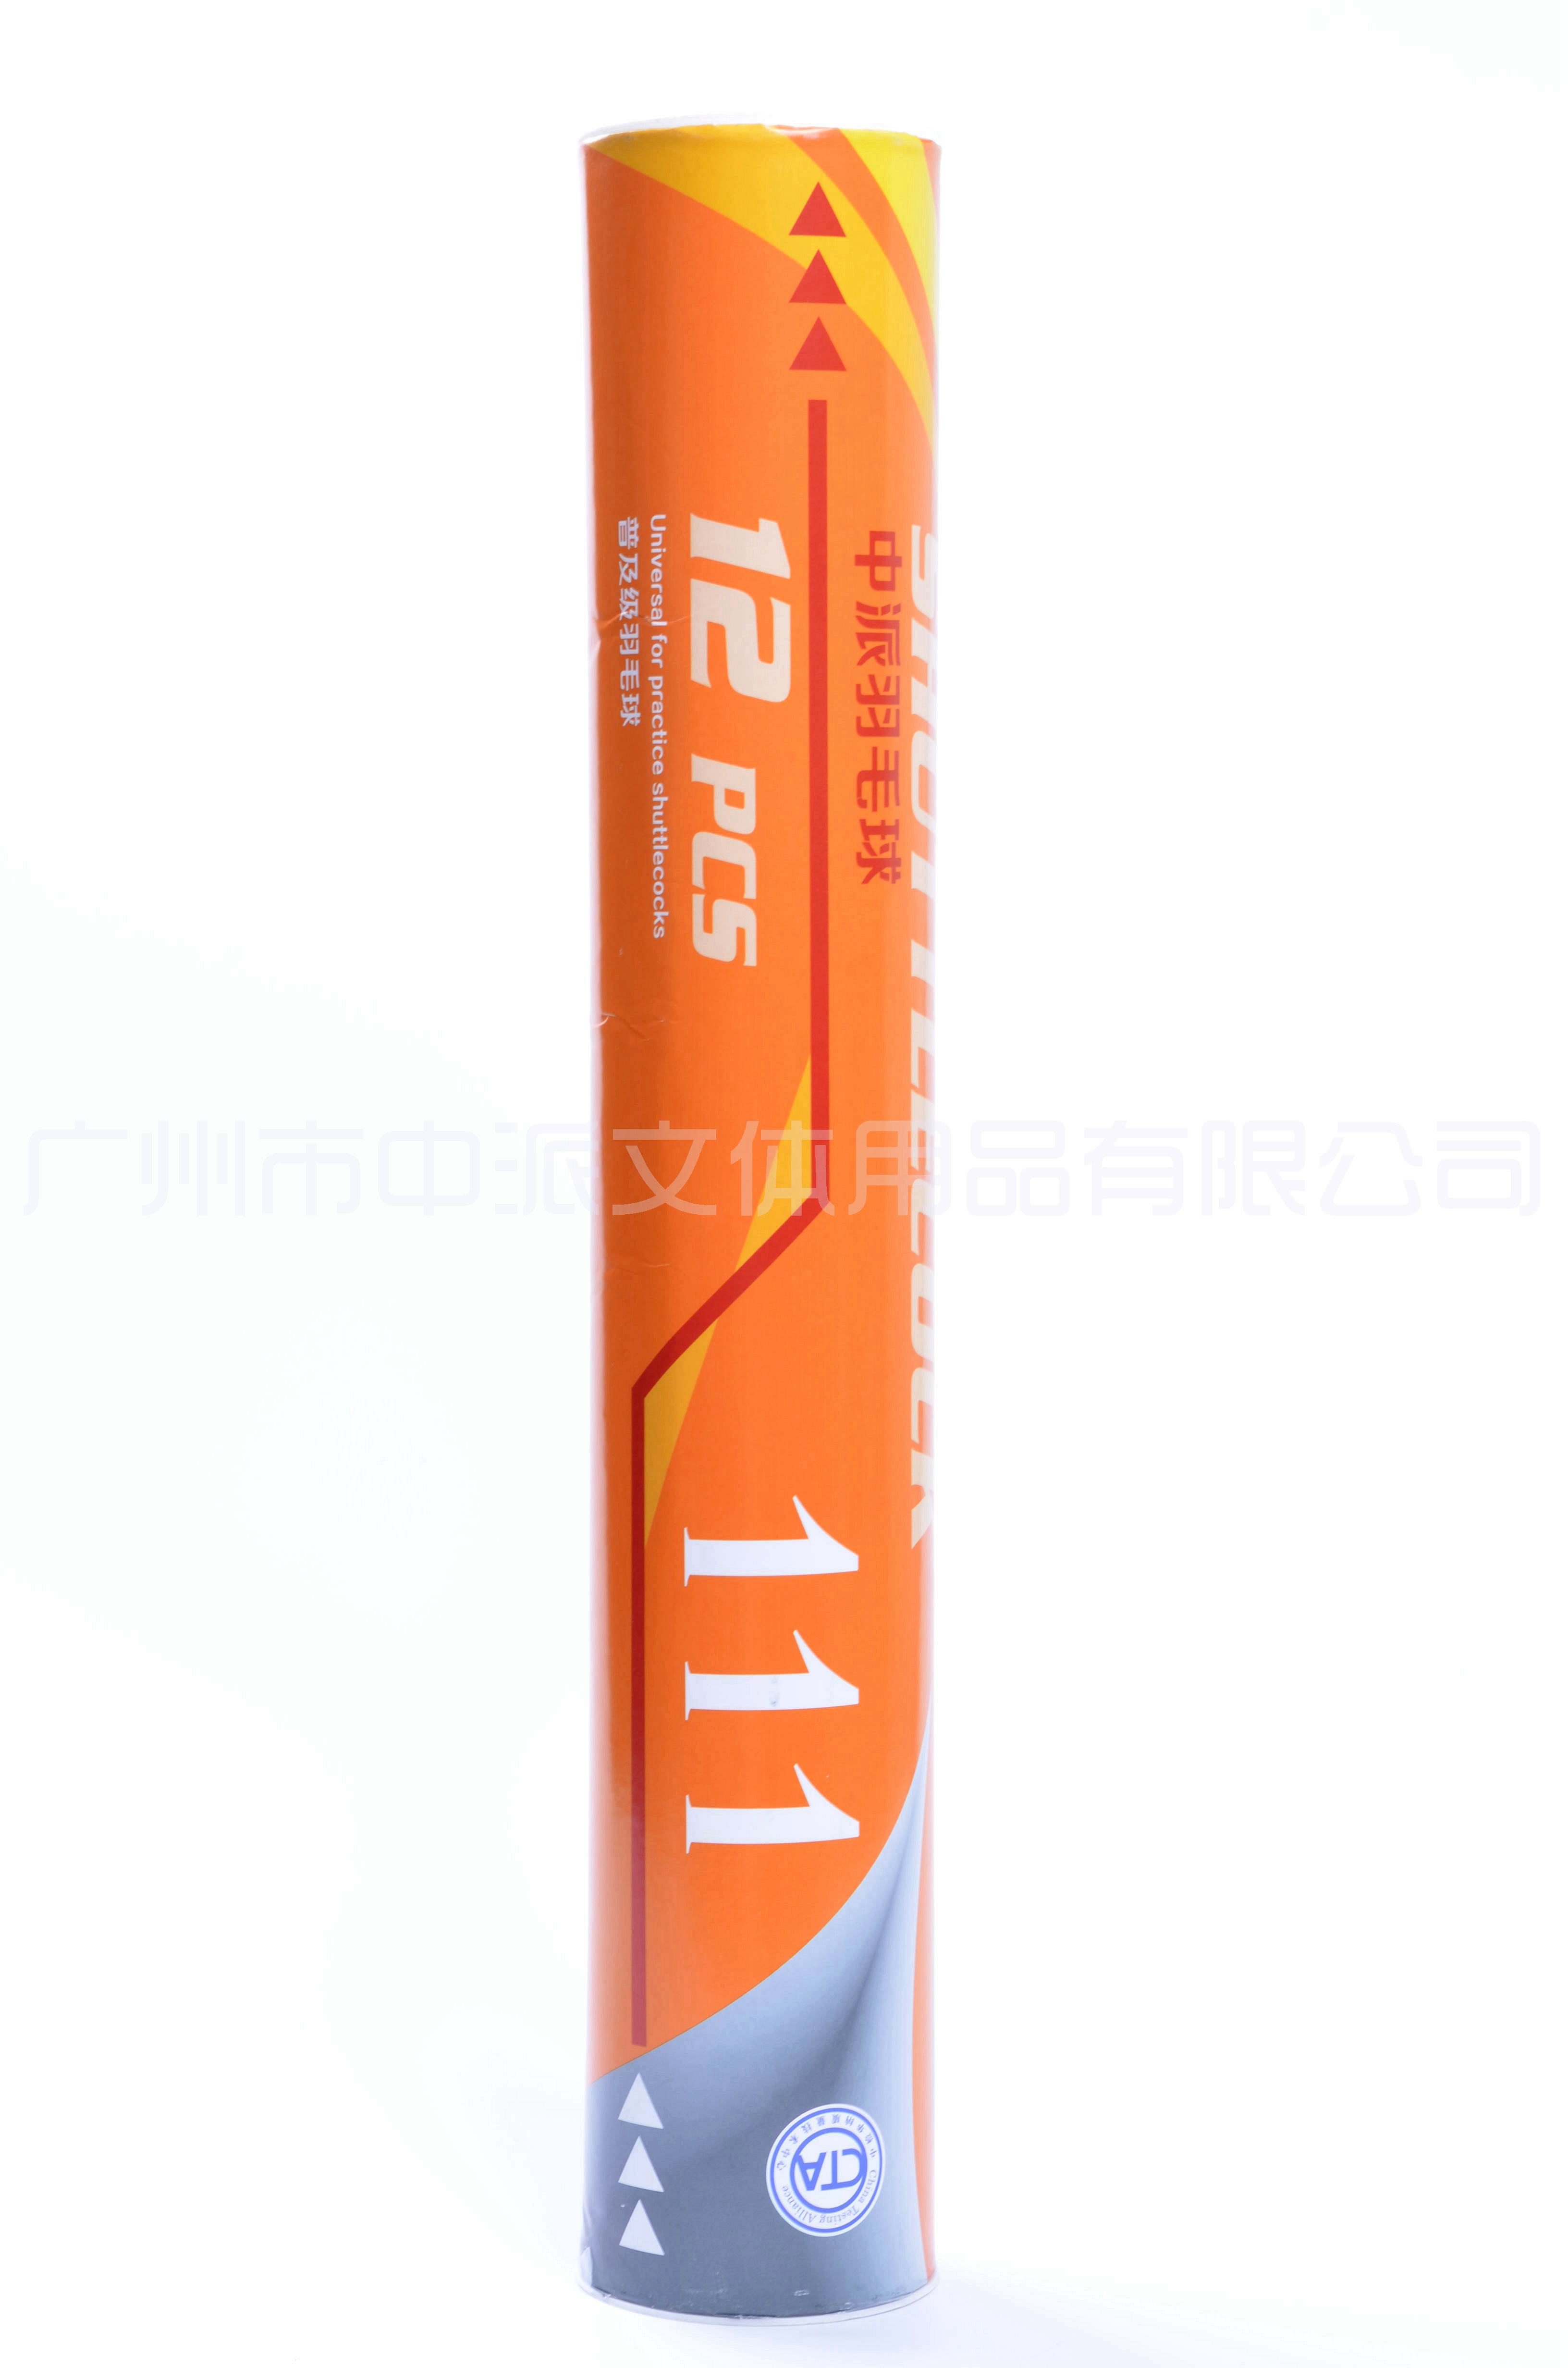 ZP-111 中派羽毛球 ZP-111 ZHONGPAI Badminton